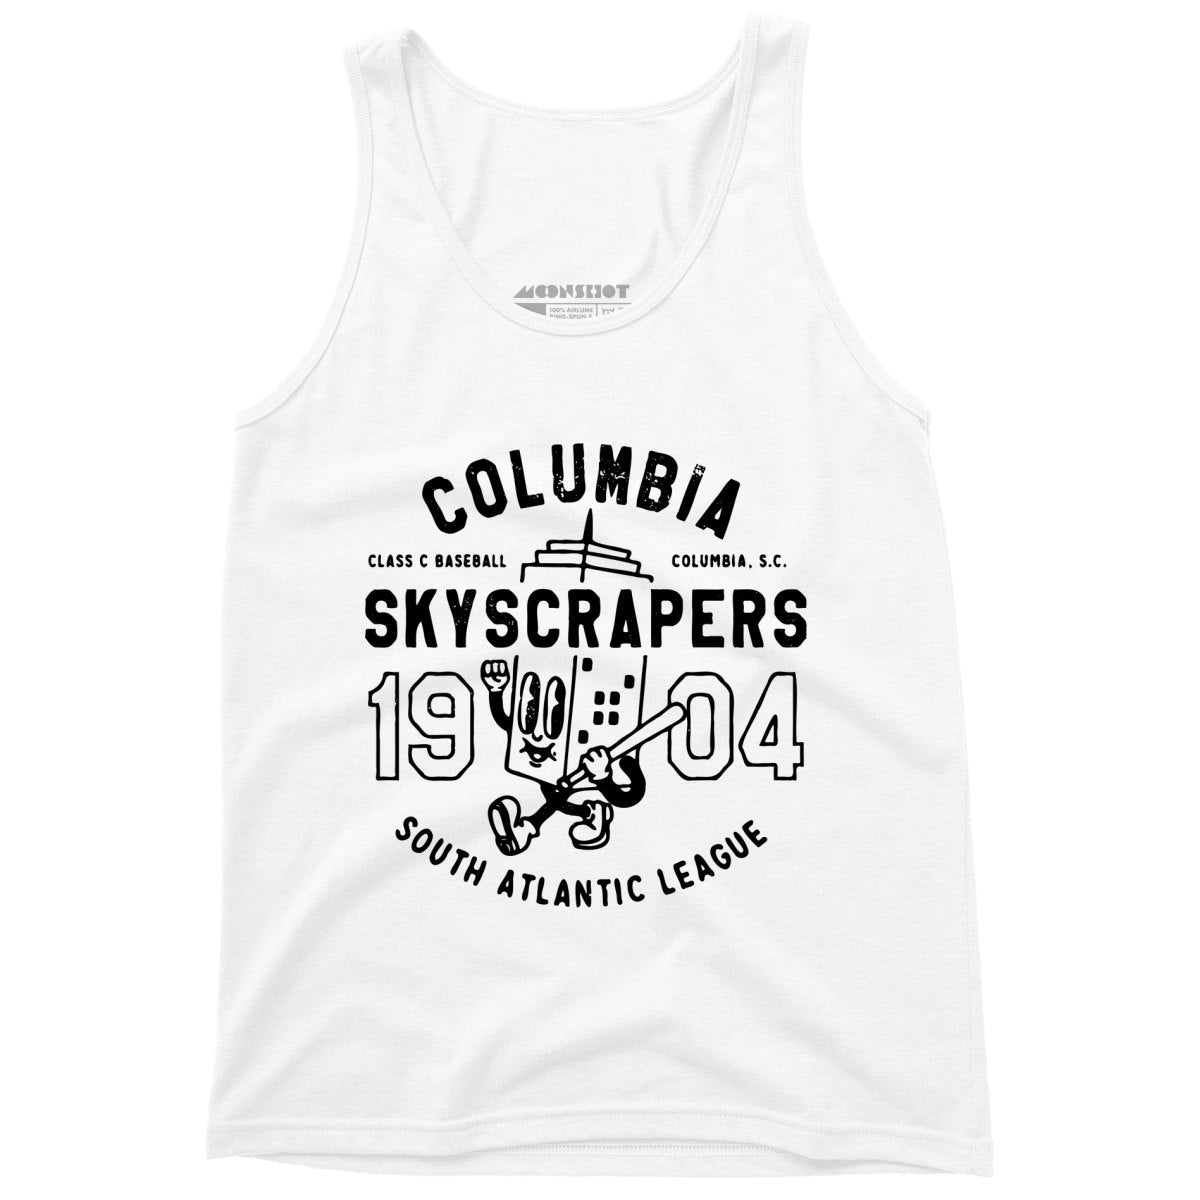 Columbia Skyscrapers - South Carolina - Vintage Defunct Baseball Teams - Unisex Tank Top